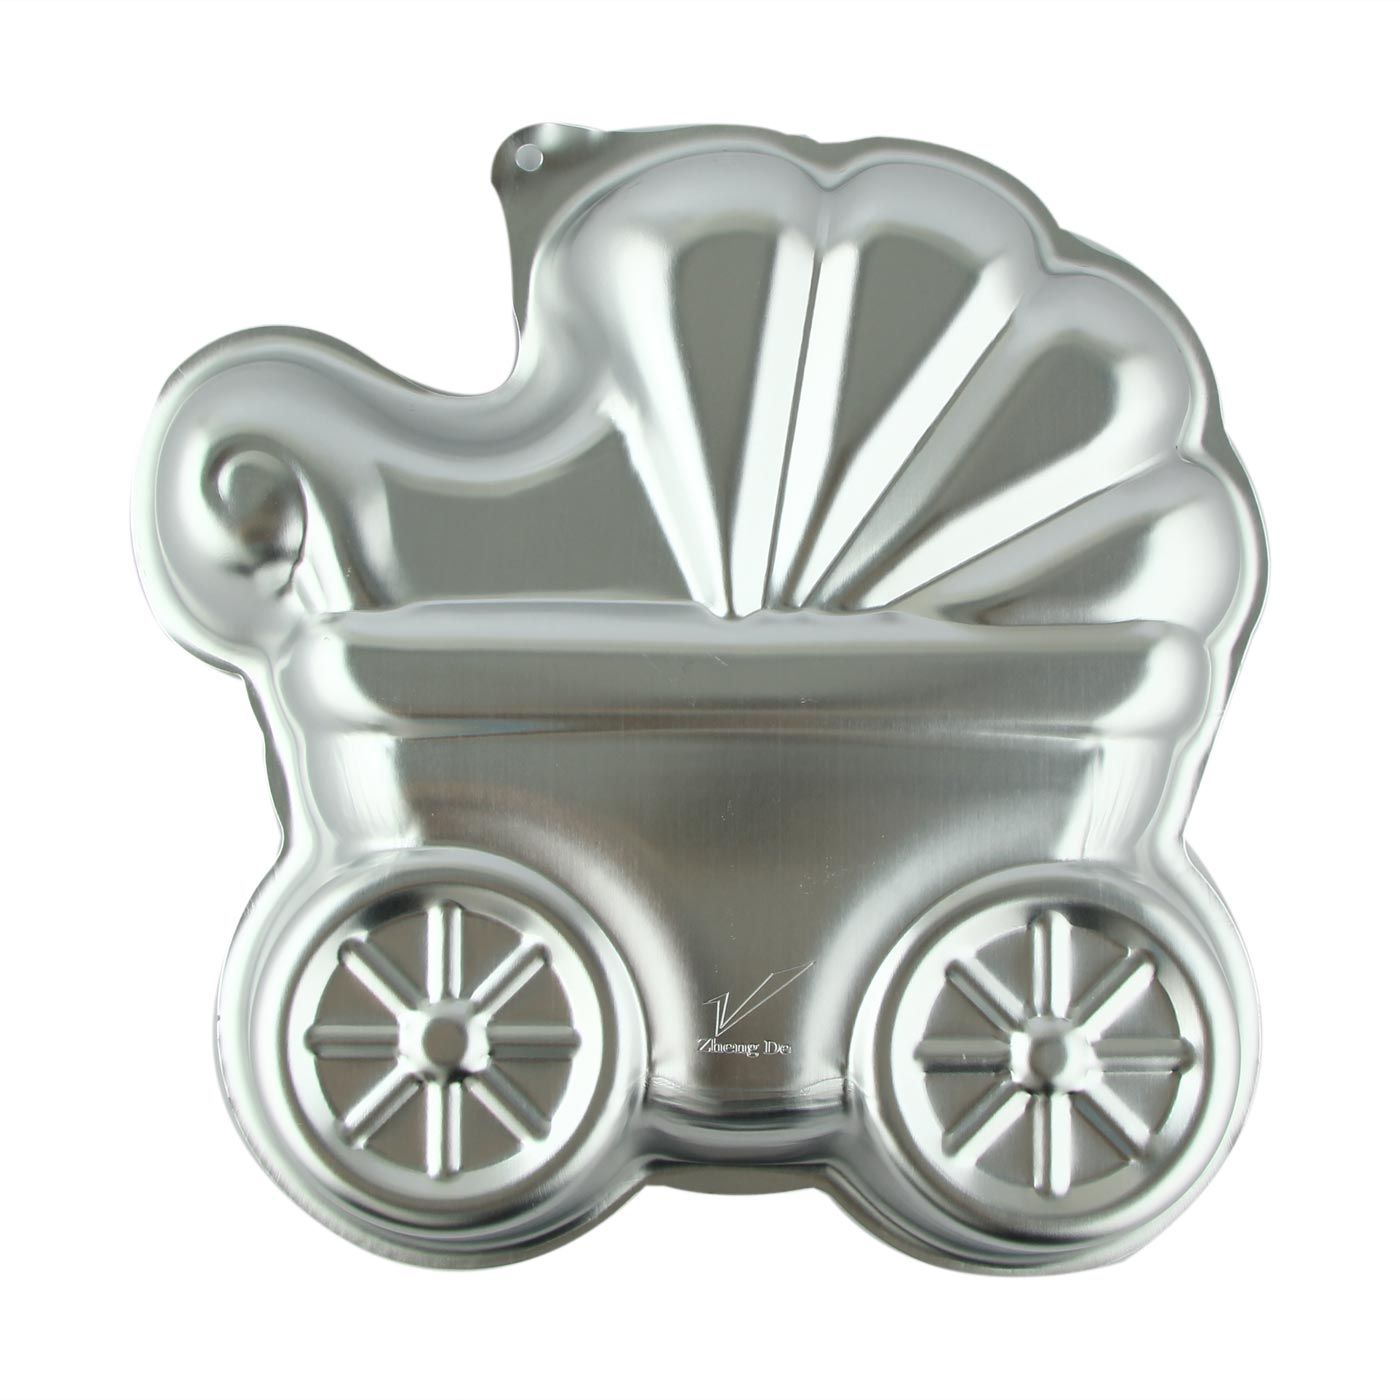 Delizioso Baby Buggy Baking Tray - 1